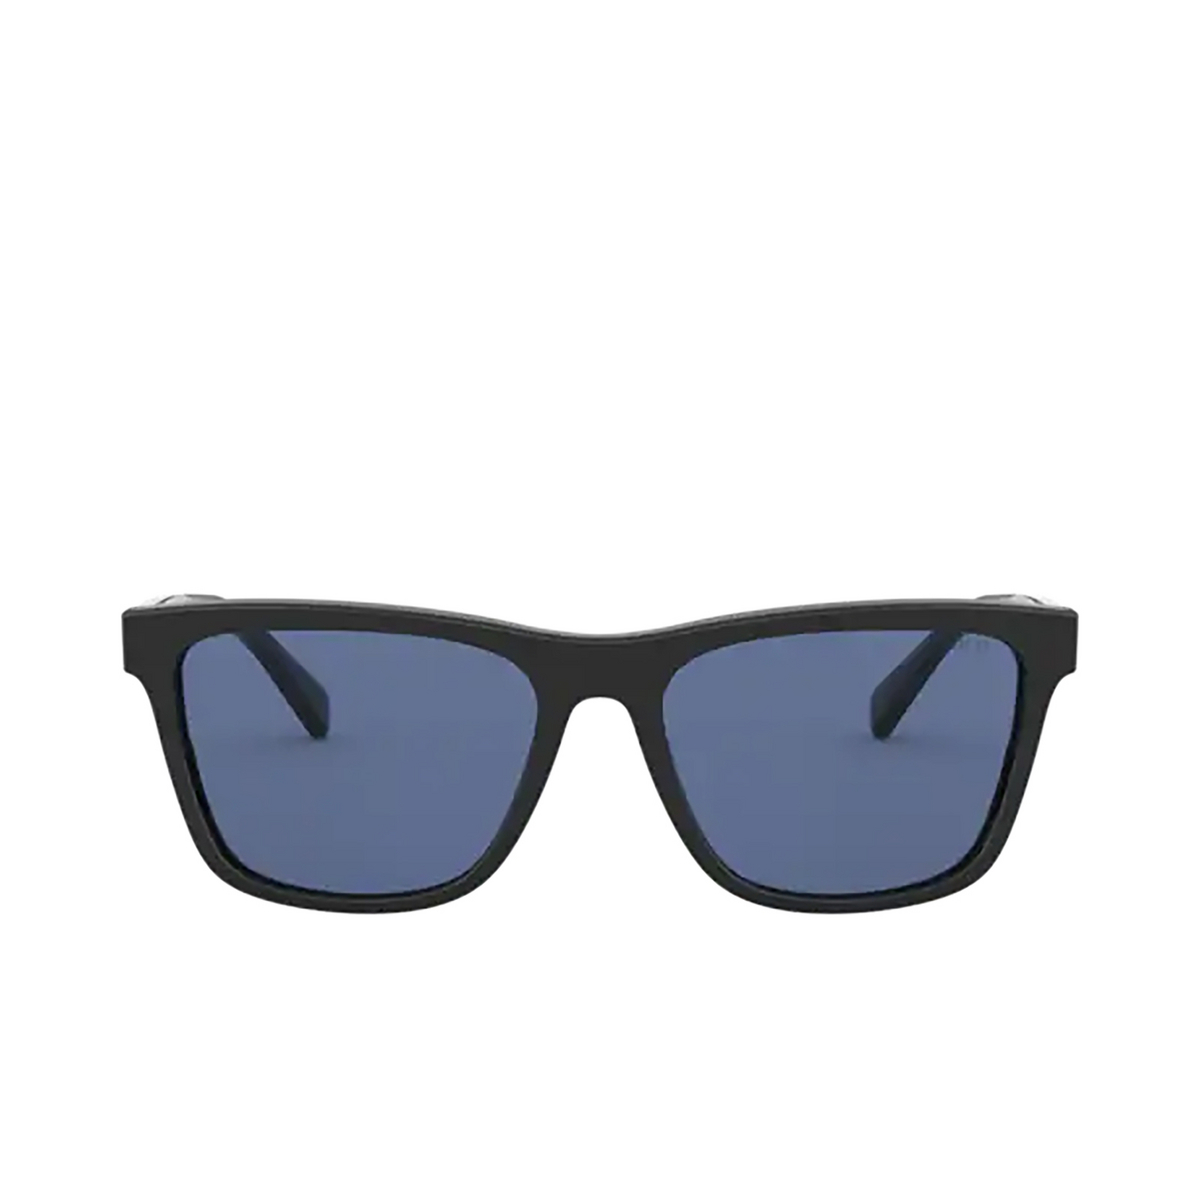 Polo Ralph Lauren PH4167 Sunglasses 500180 SHINY BLACK - front view